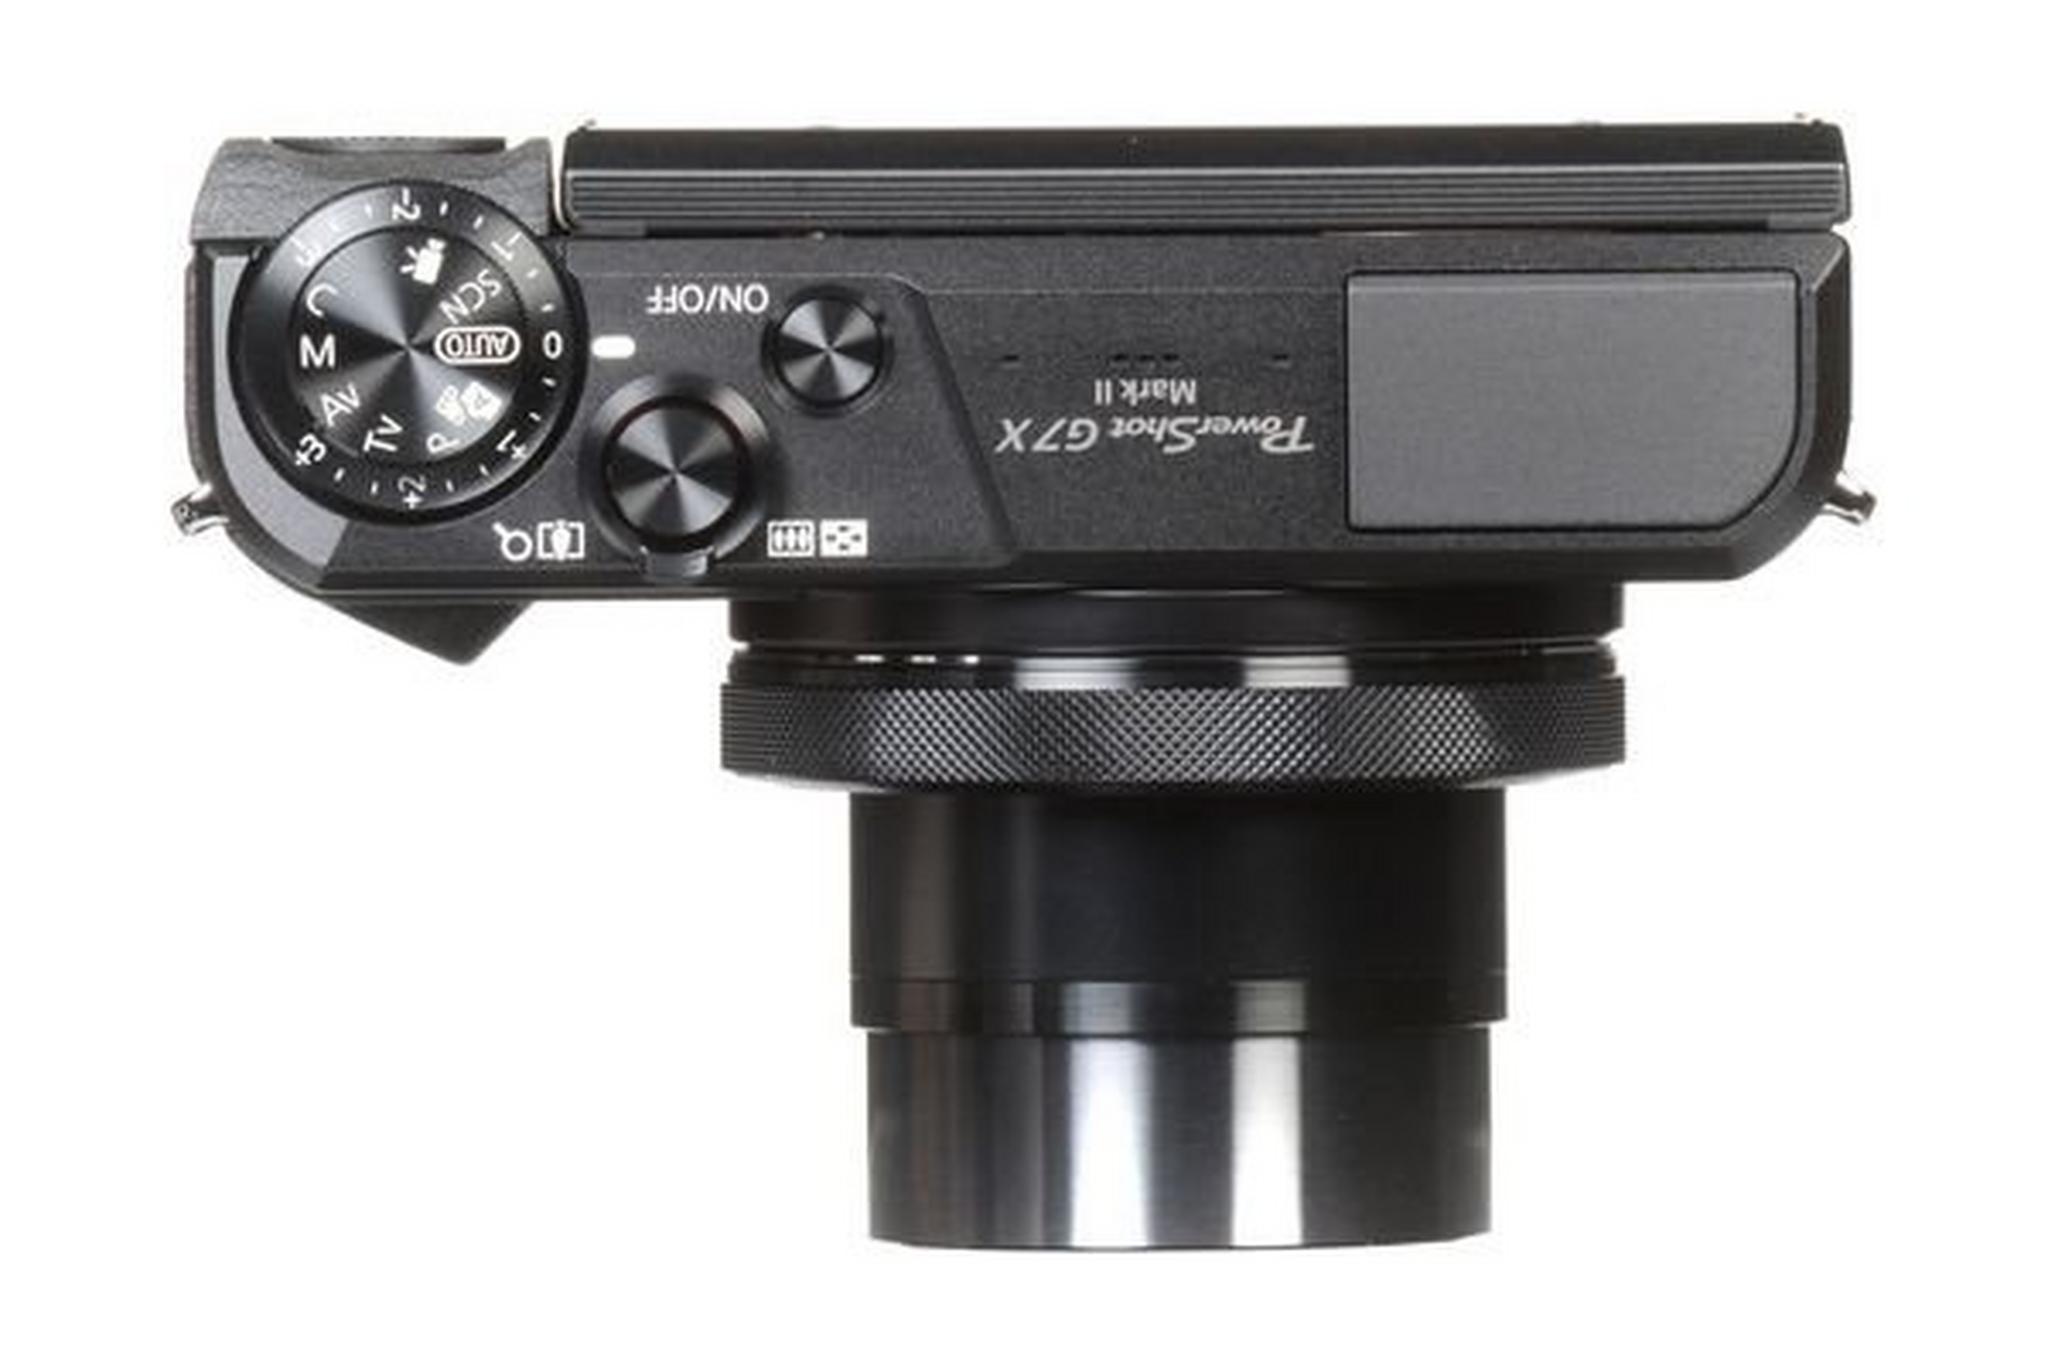 Canon PowerShot G7 X Mark II 20.1 MP 3.0-inch Touchscreen Display Digital Camera